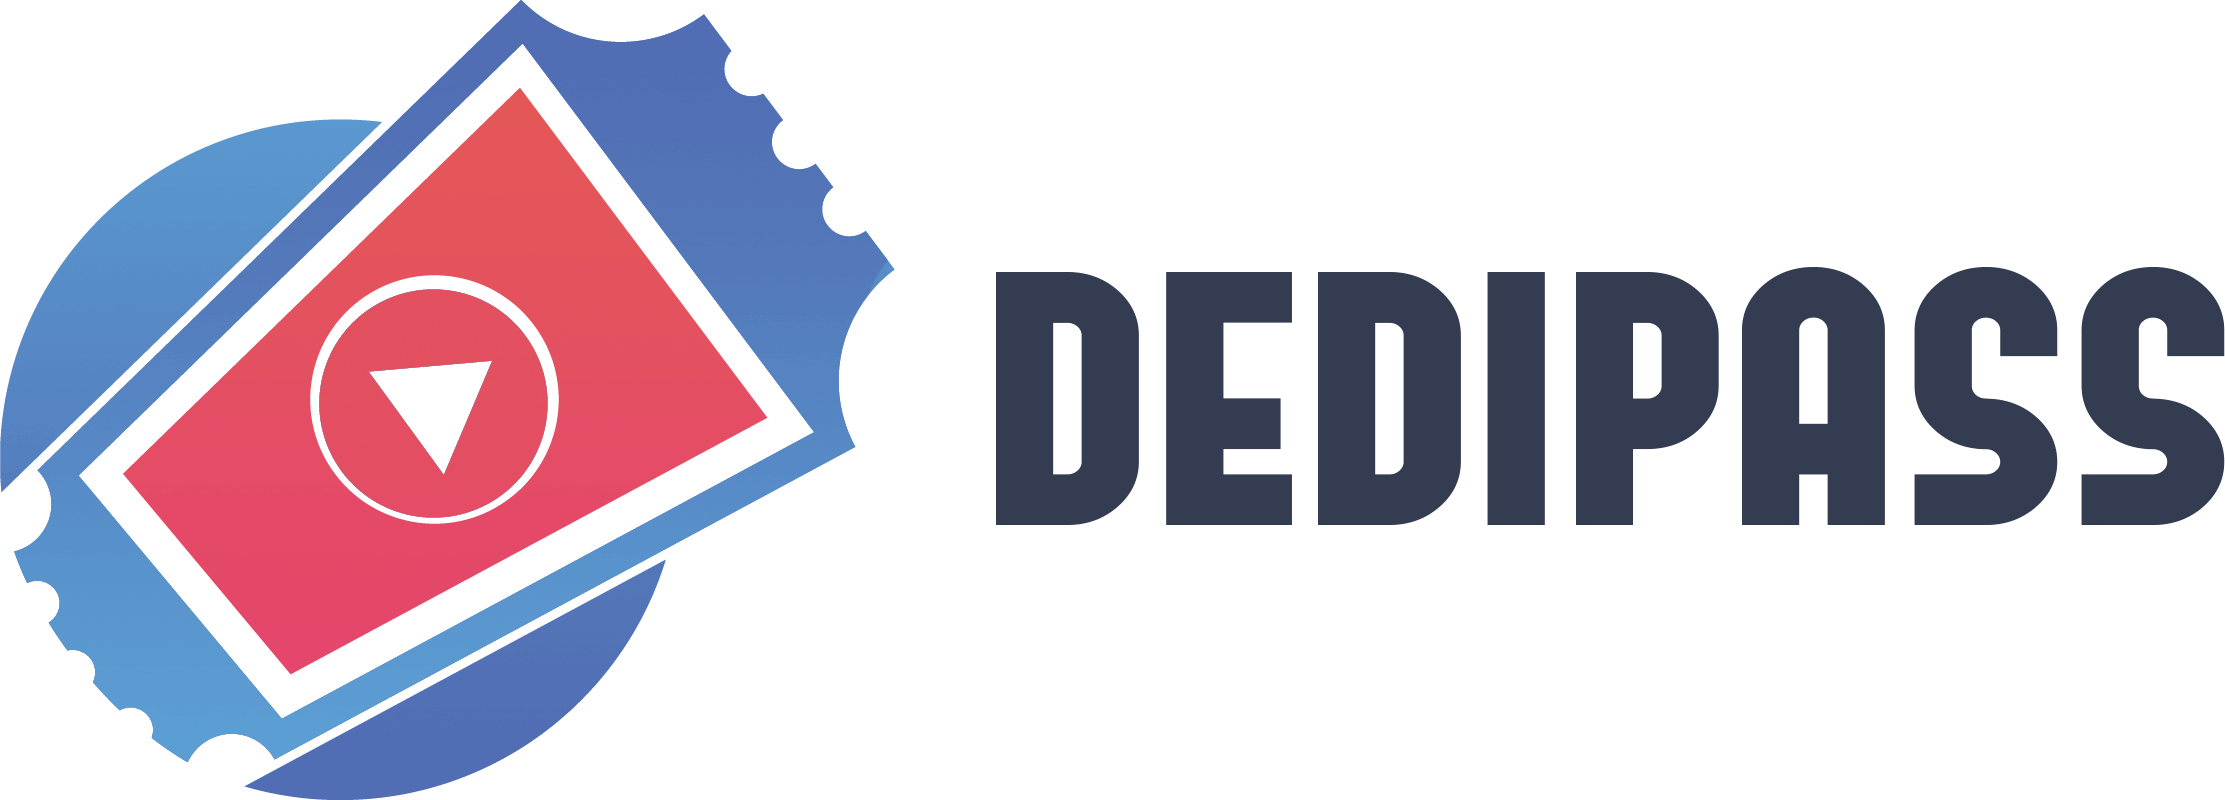 Logo Dedipass